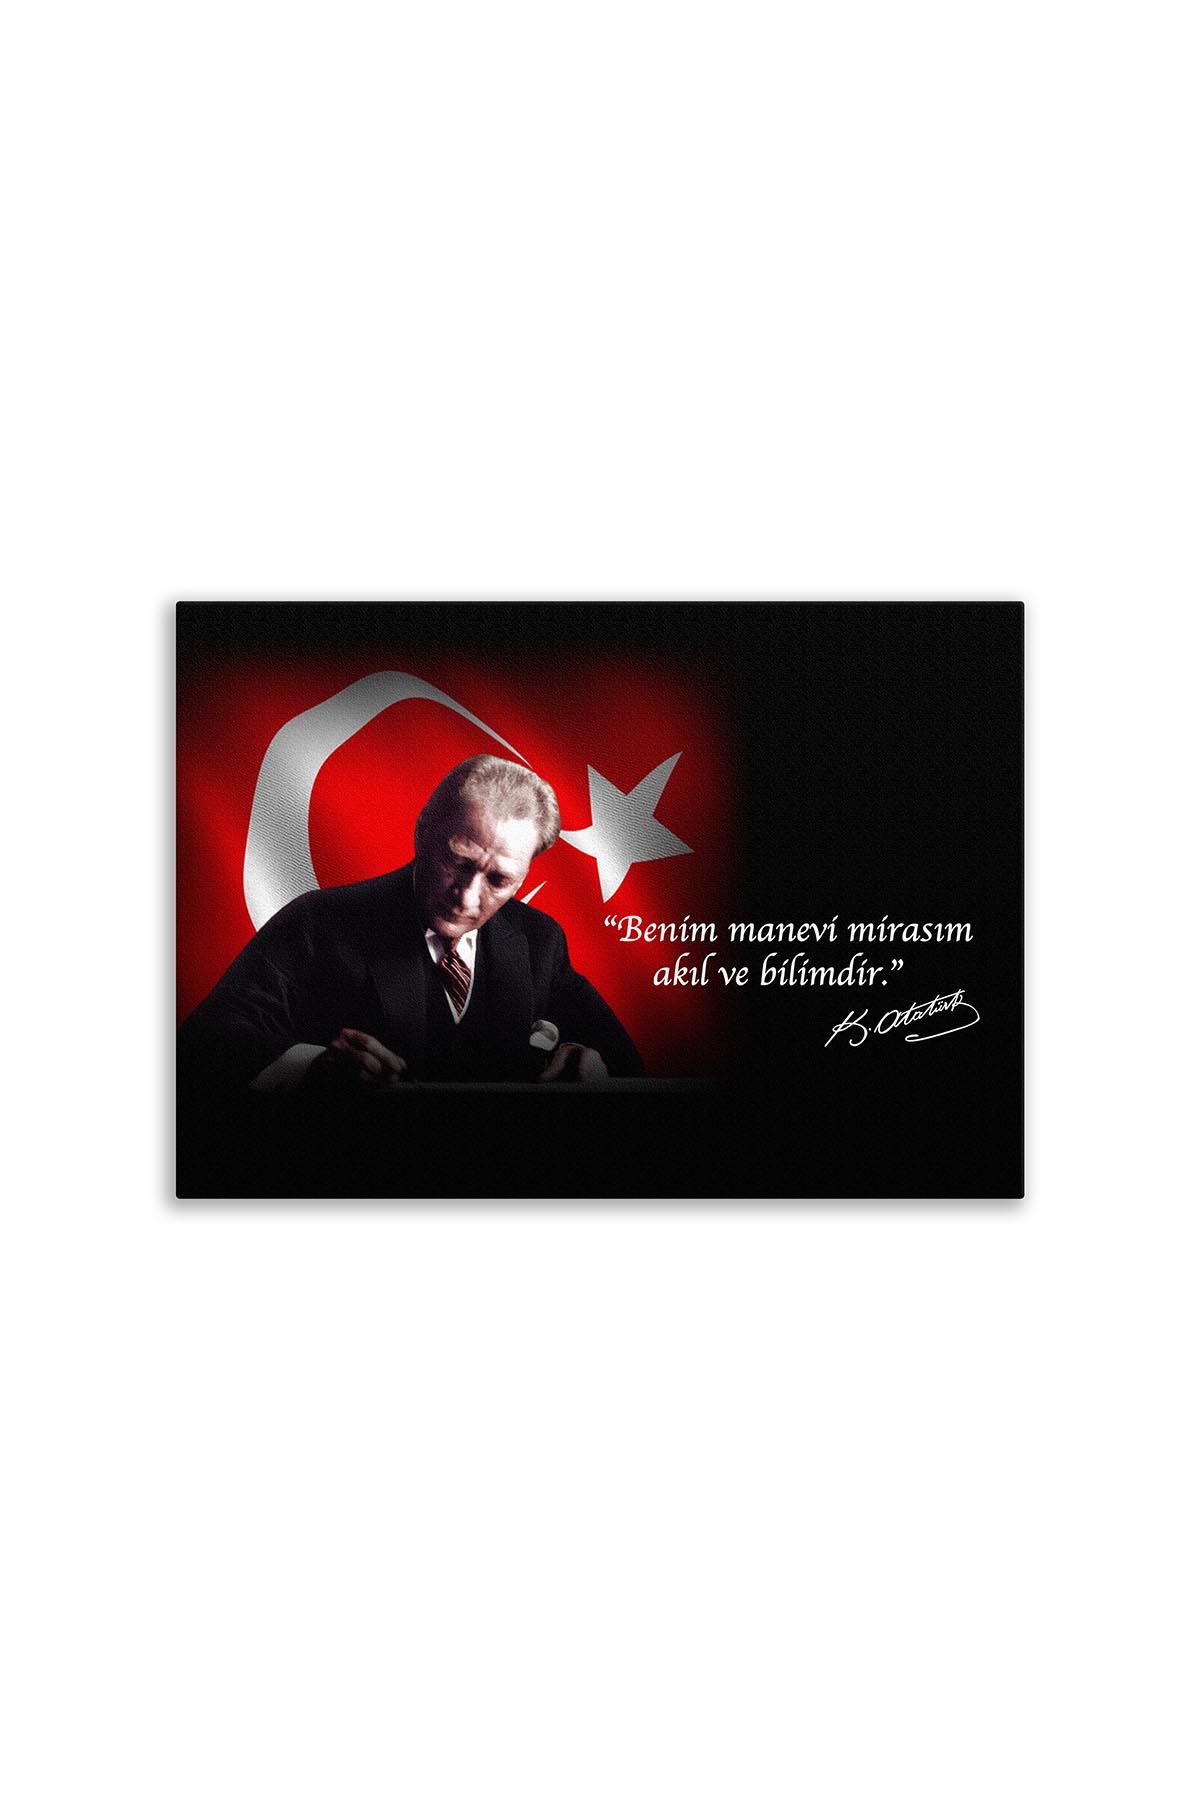 Atatürk Canvas Board With Turkish Flag | Printed Canvas Board | Customized Canvas Board  